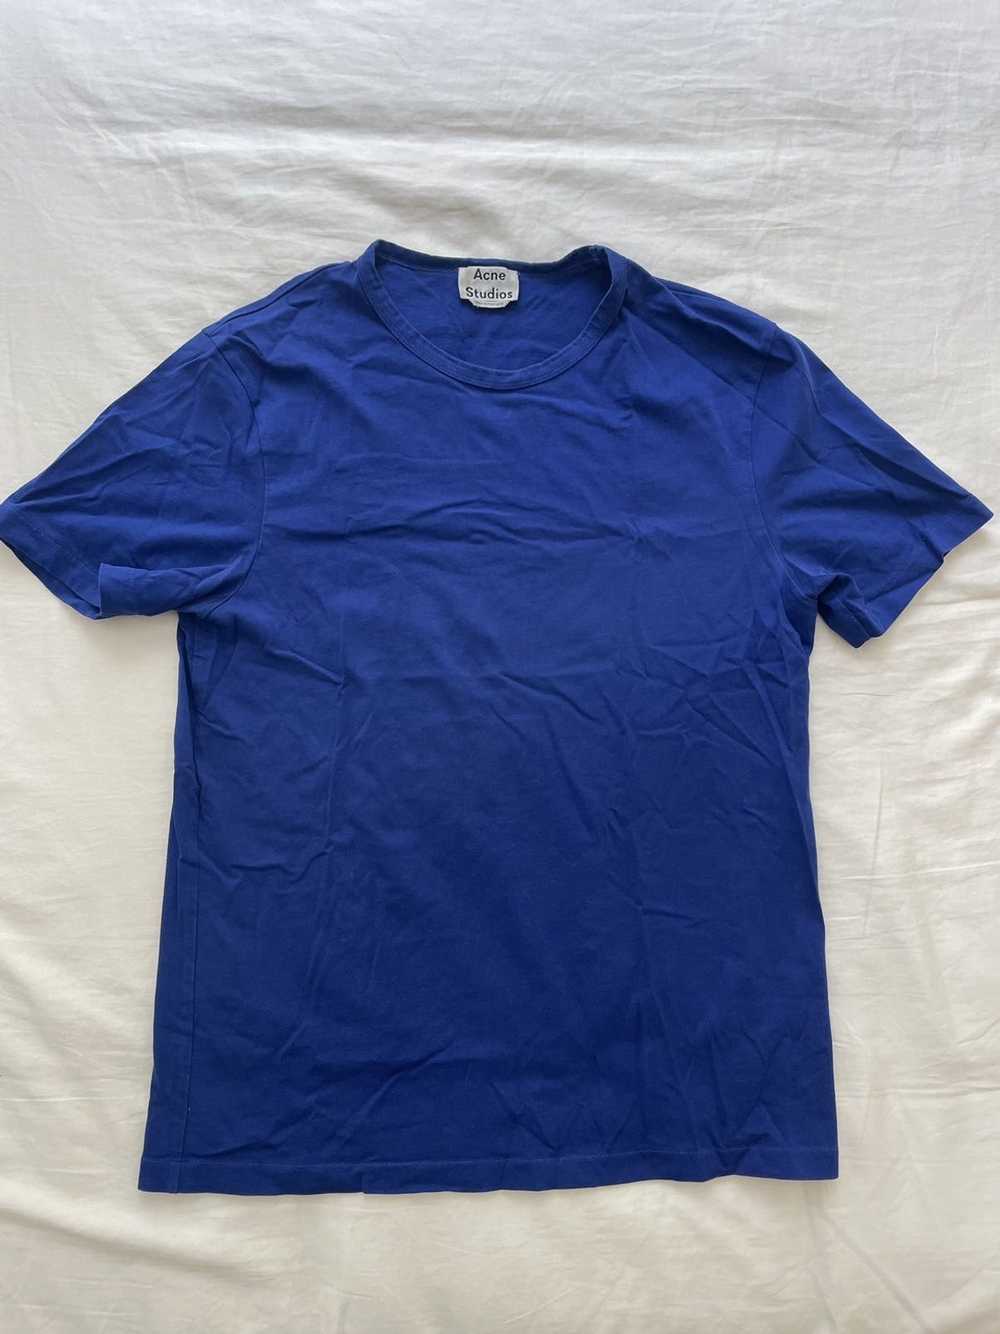 Acne Studios Acne Srudios Blue Eddy Shirt - image 2